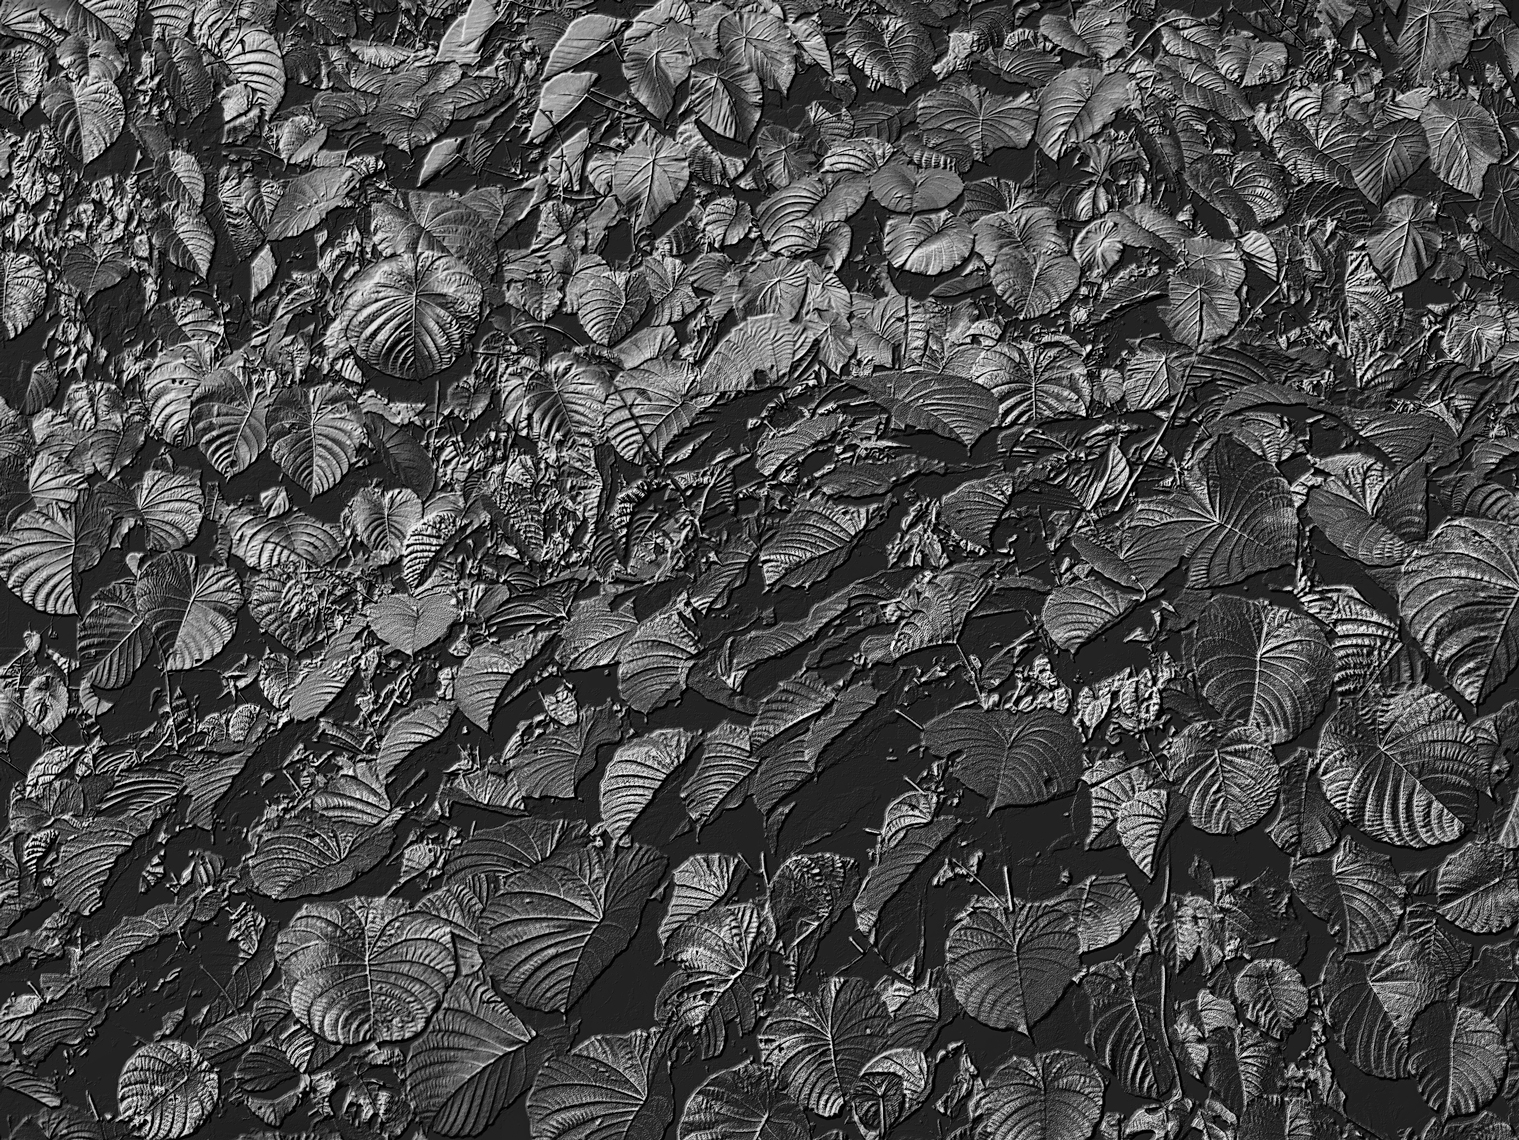 Jon Wyatt Photography - Fault Line VII - A tsunami of vegetation - invasive vines in samoa